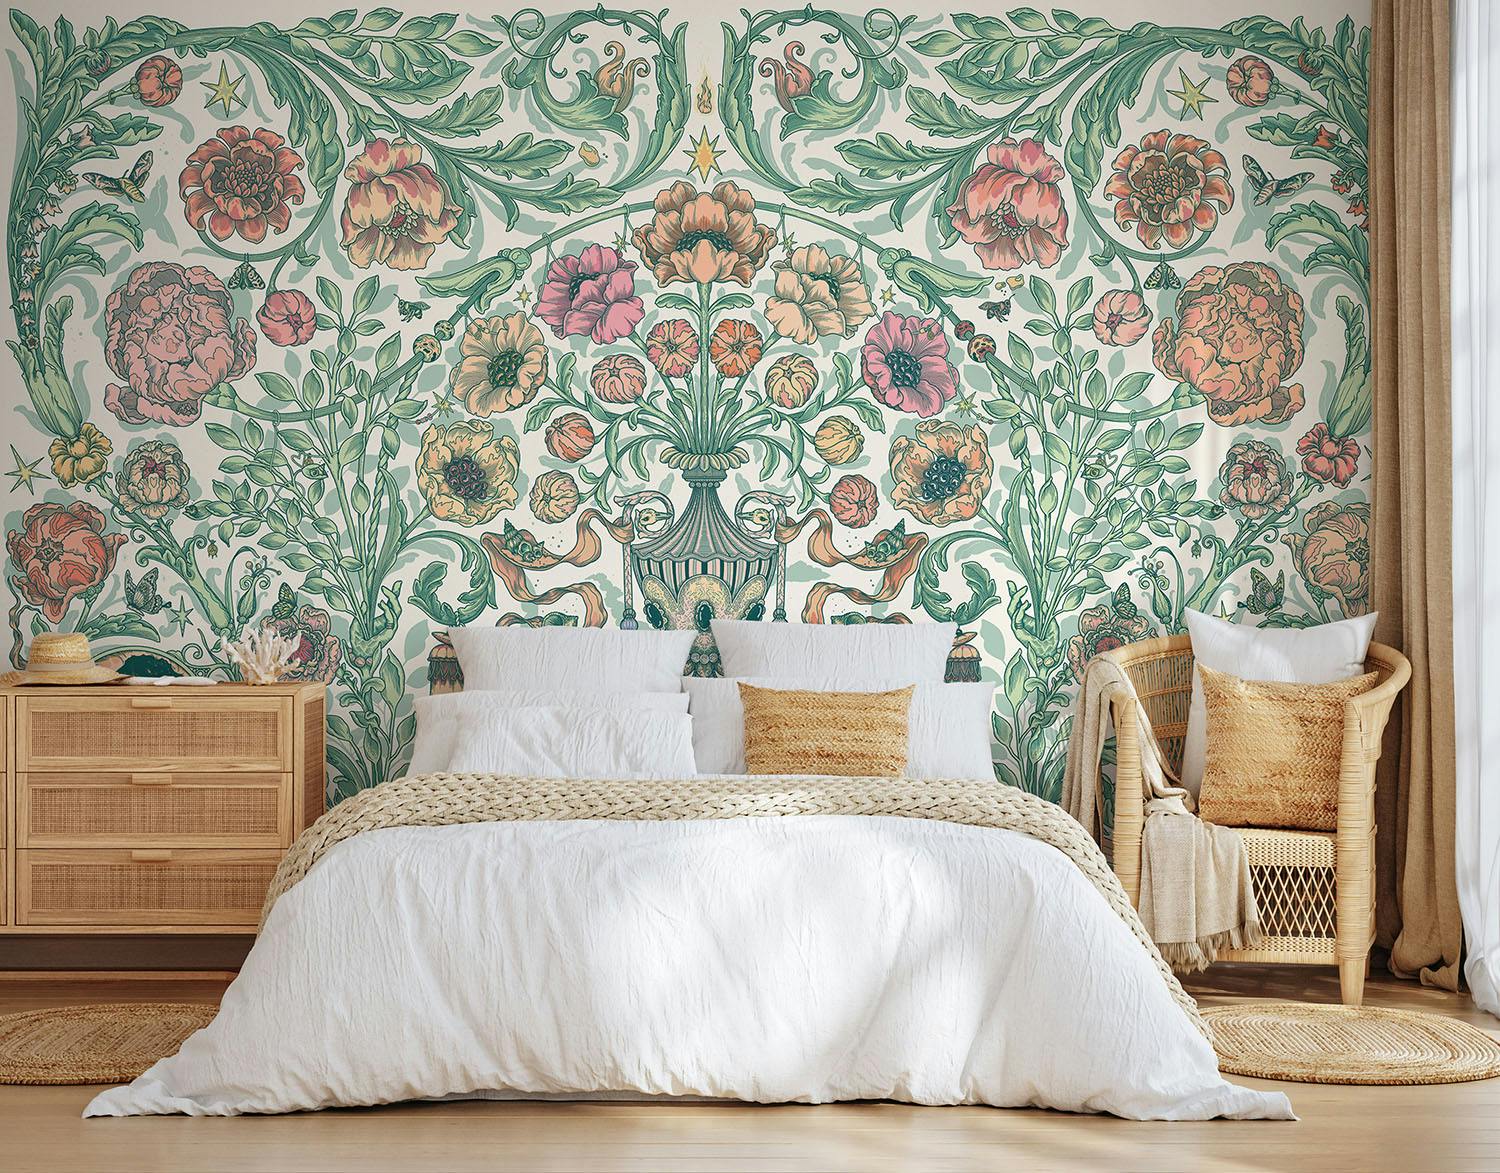 "le jardin merveilleux" fresco in an intense and light green set on a bedroom wall